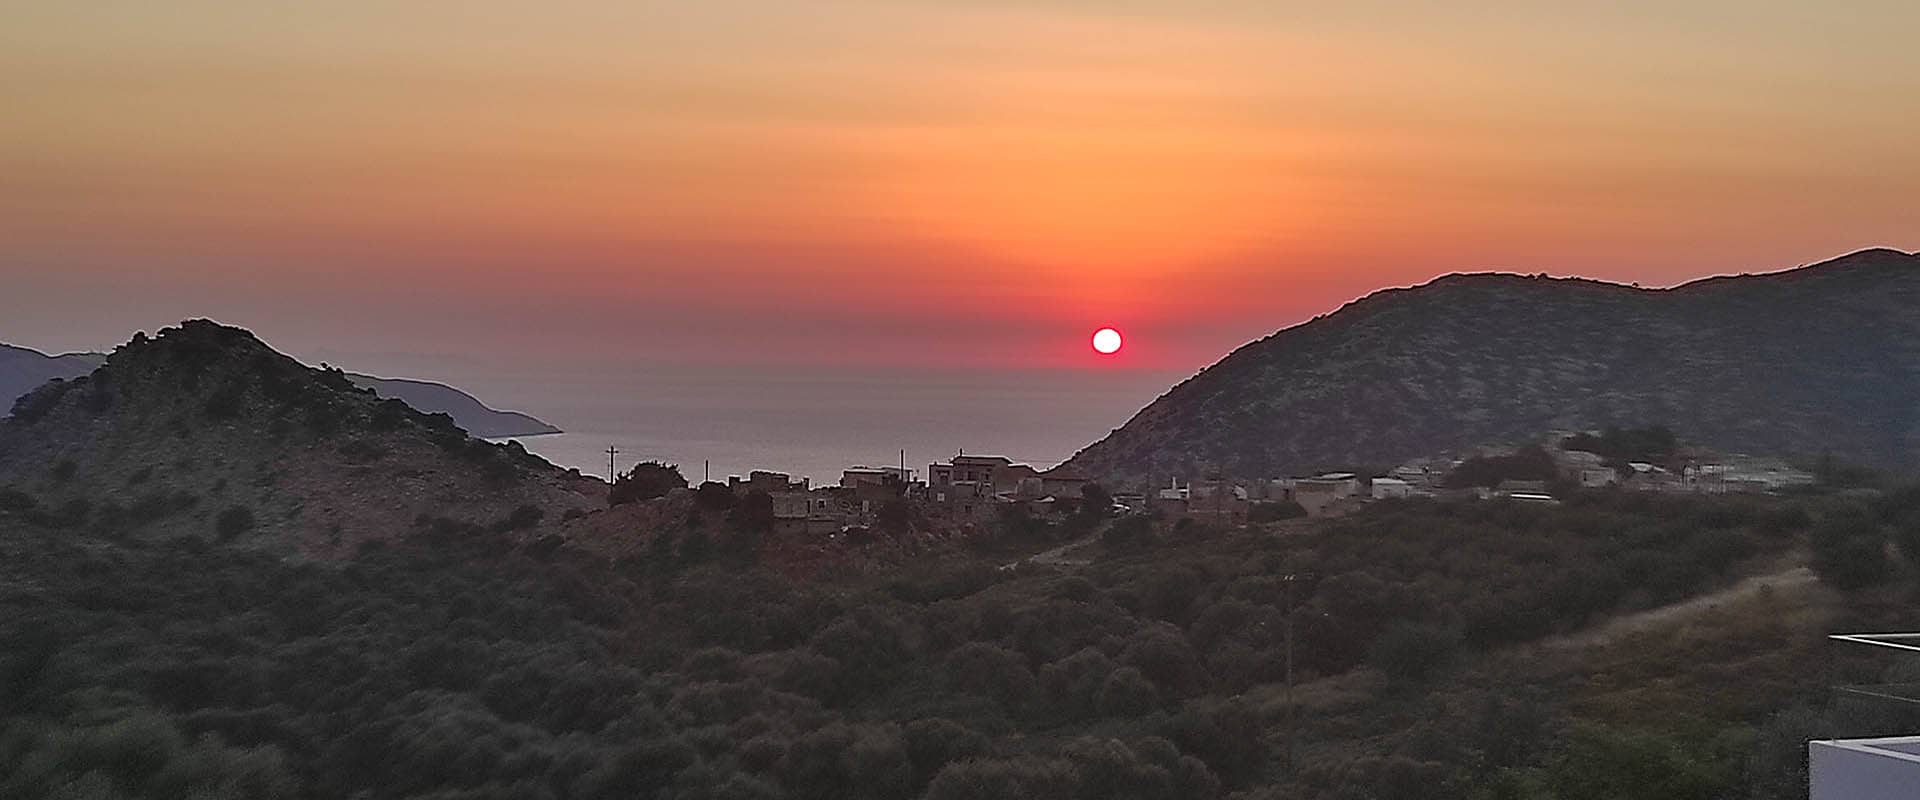 solnedgang på Kreta, Grækenland